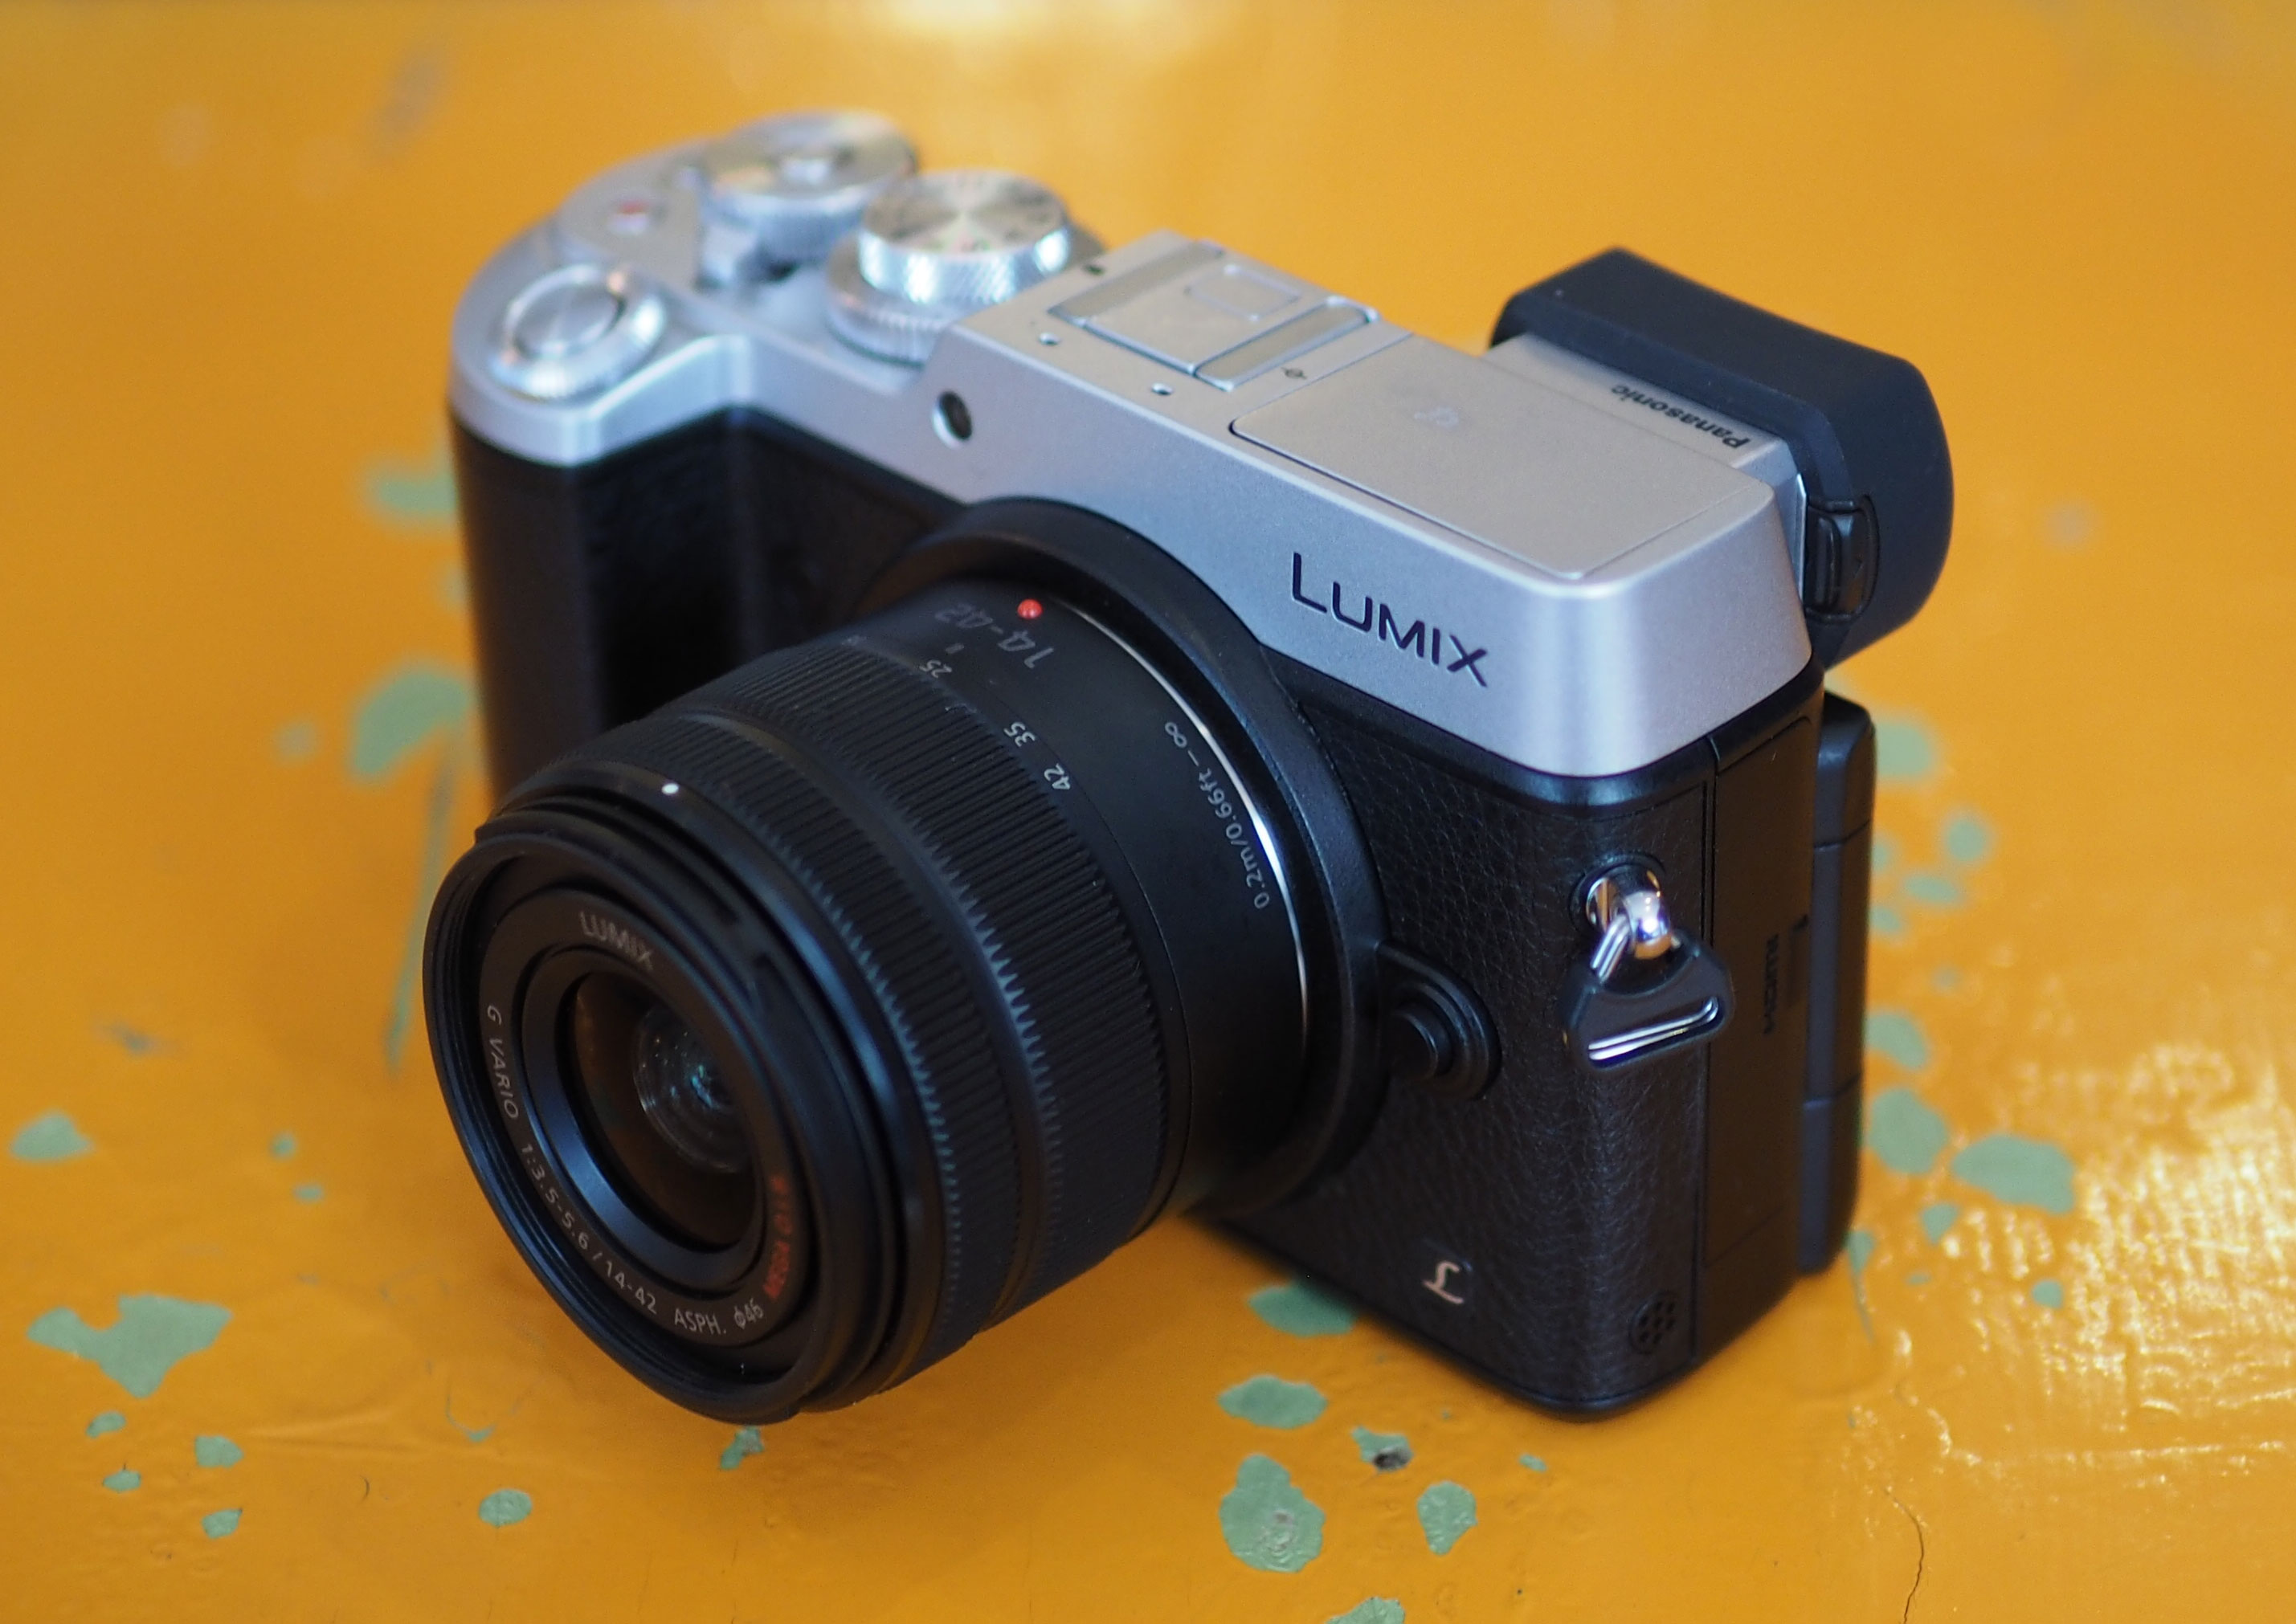 Sleutel studio puree Panasonic Lumix GX8 review | Cameralabs